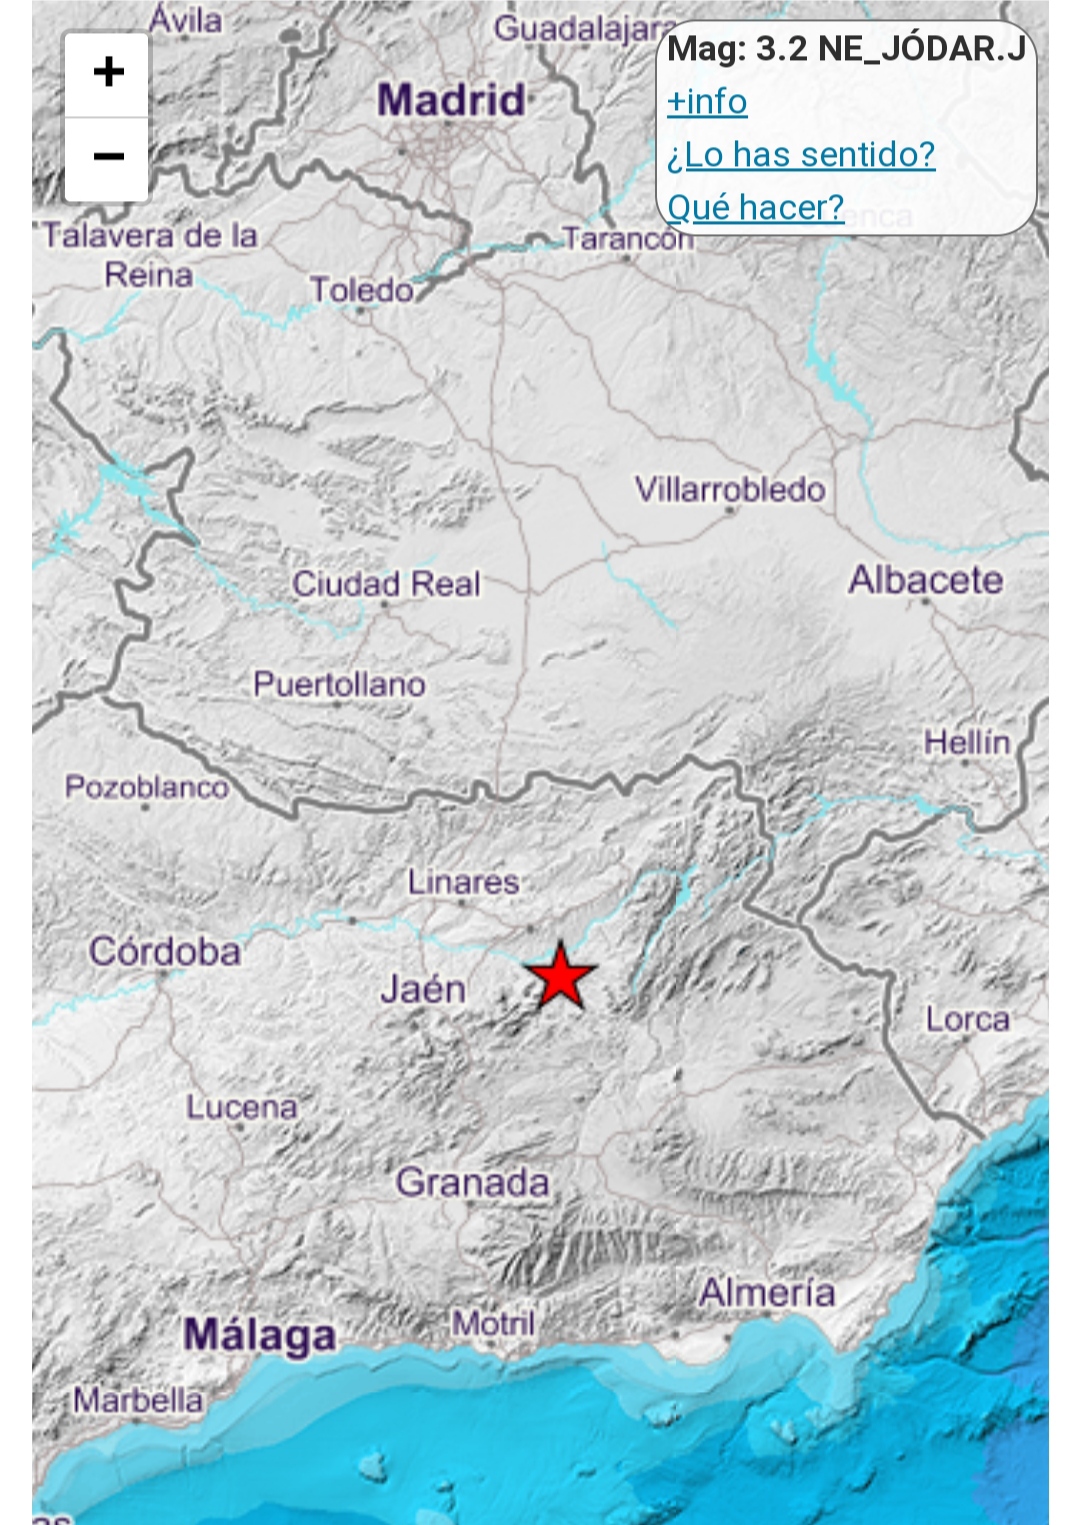 Terremoto en Jódar de magnitud 3.2 en la escala de Ritcher